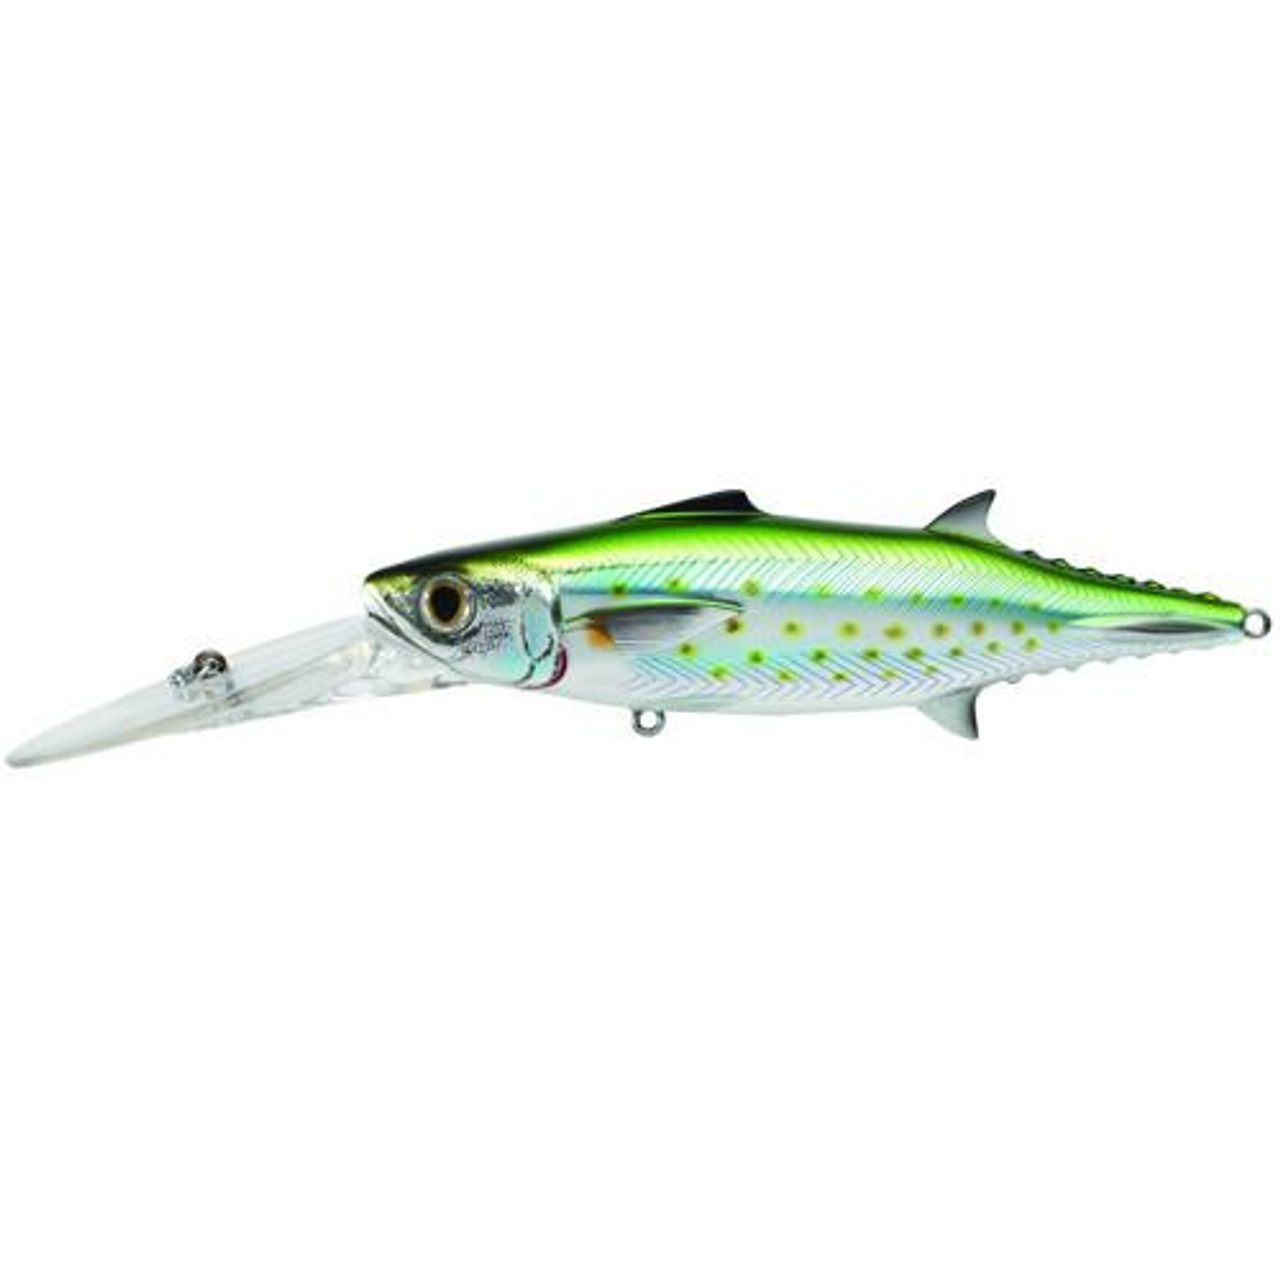 LiveTarget Lures Spanish Mackerel Trolling Bait 6, Number 2/0 Hook Size,  0'-25+' Depth, Silver/Green